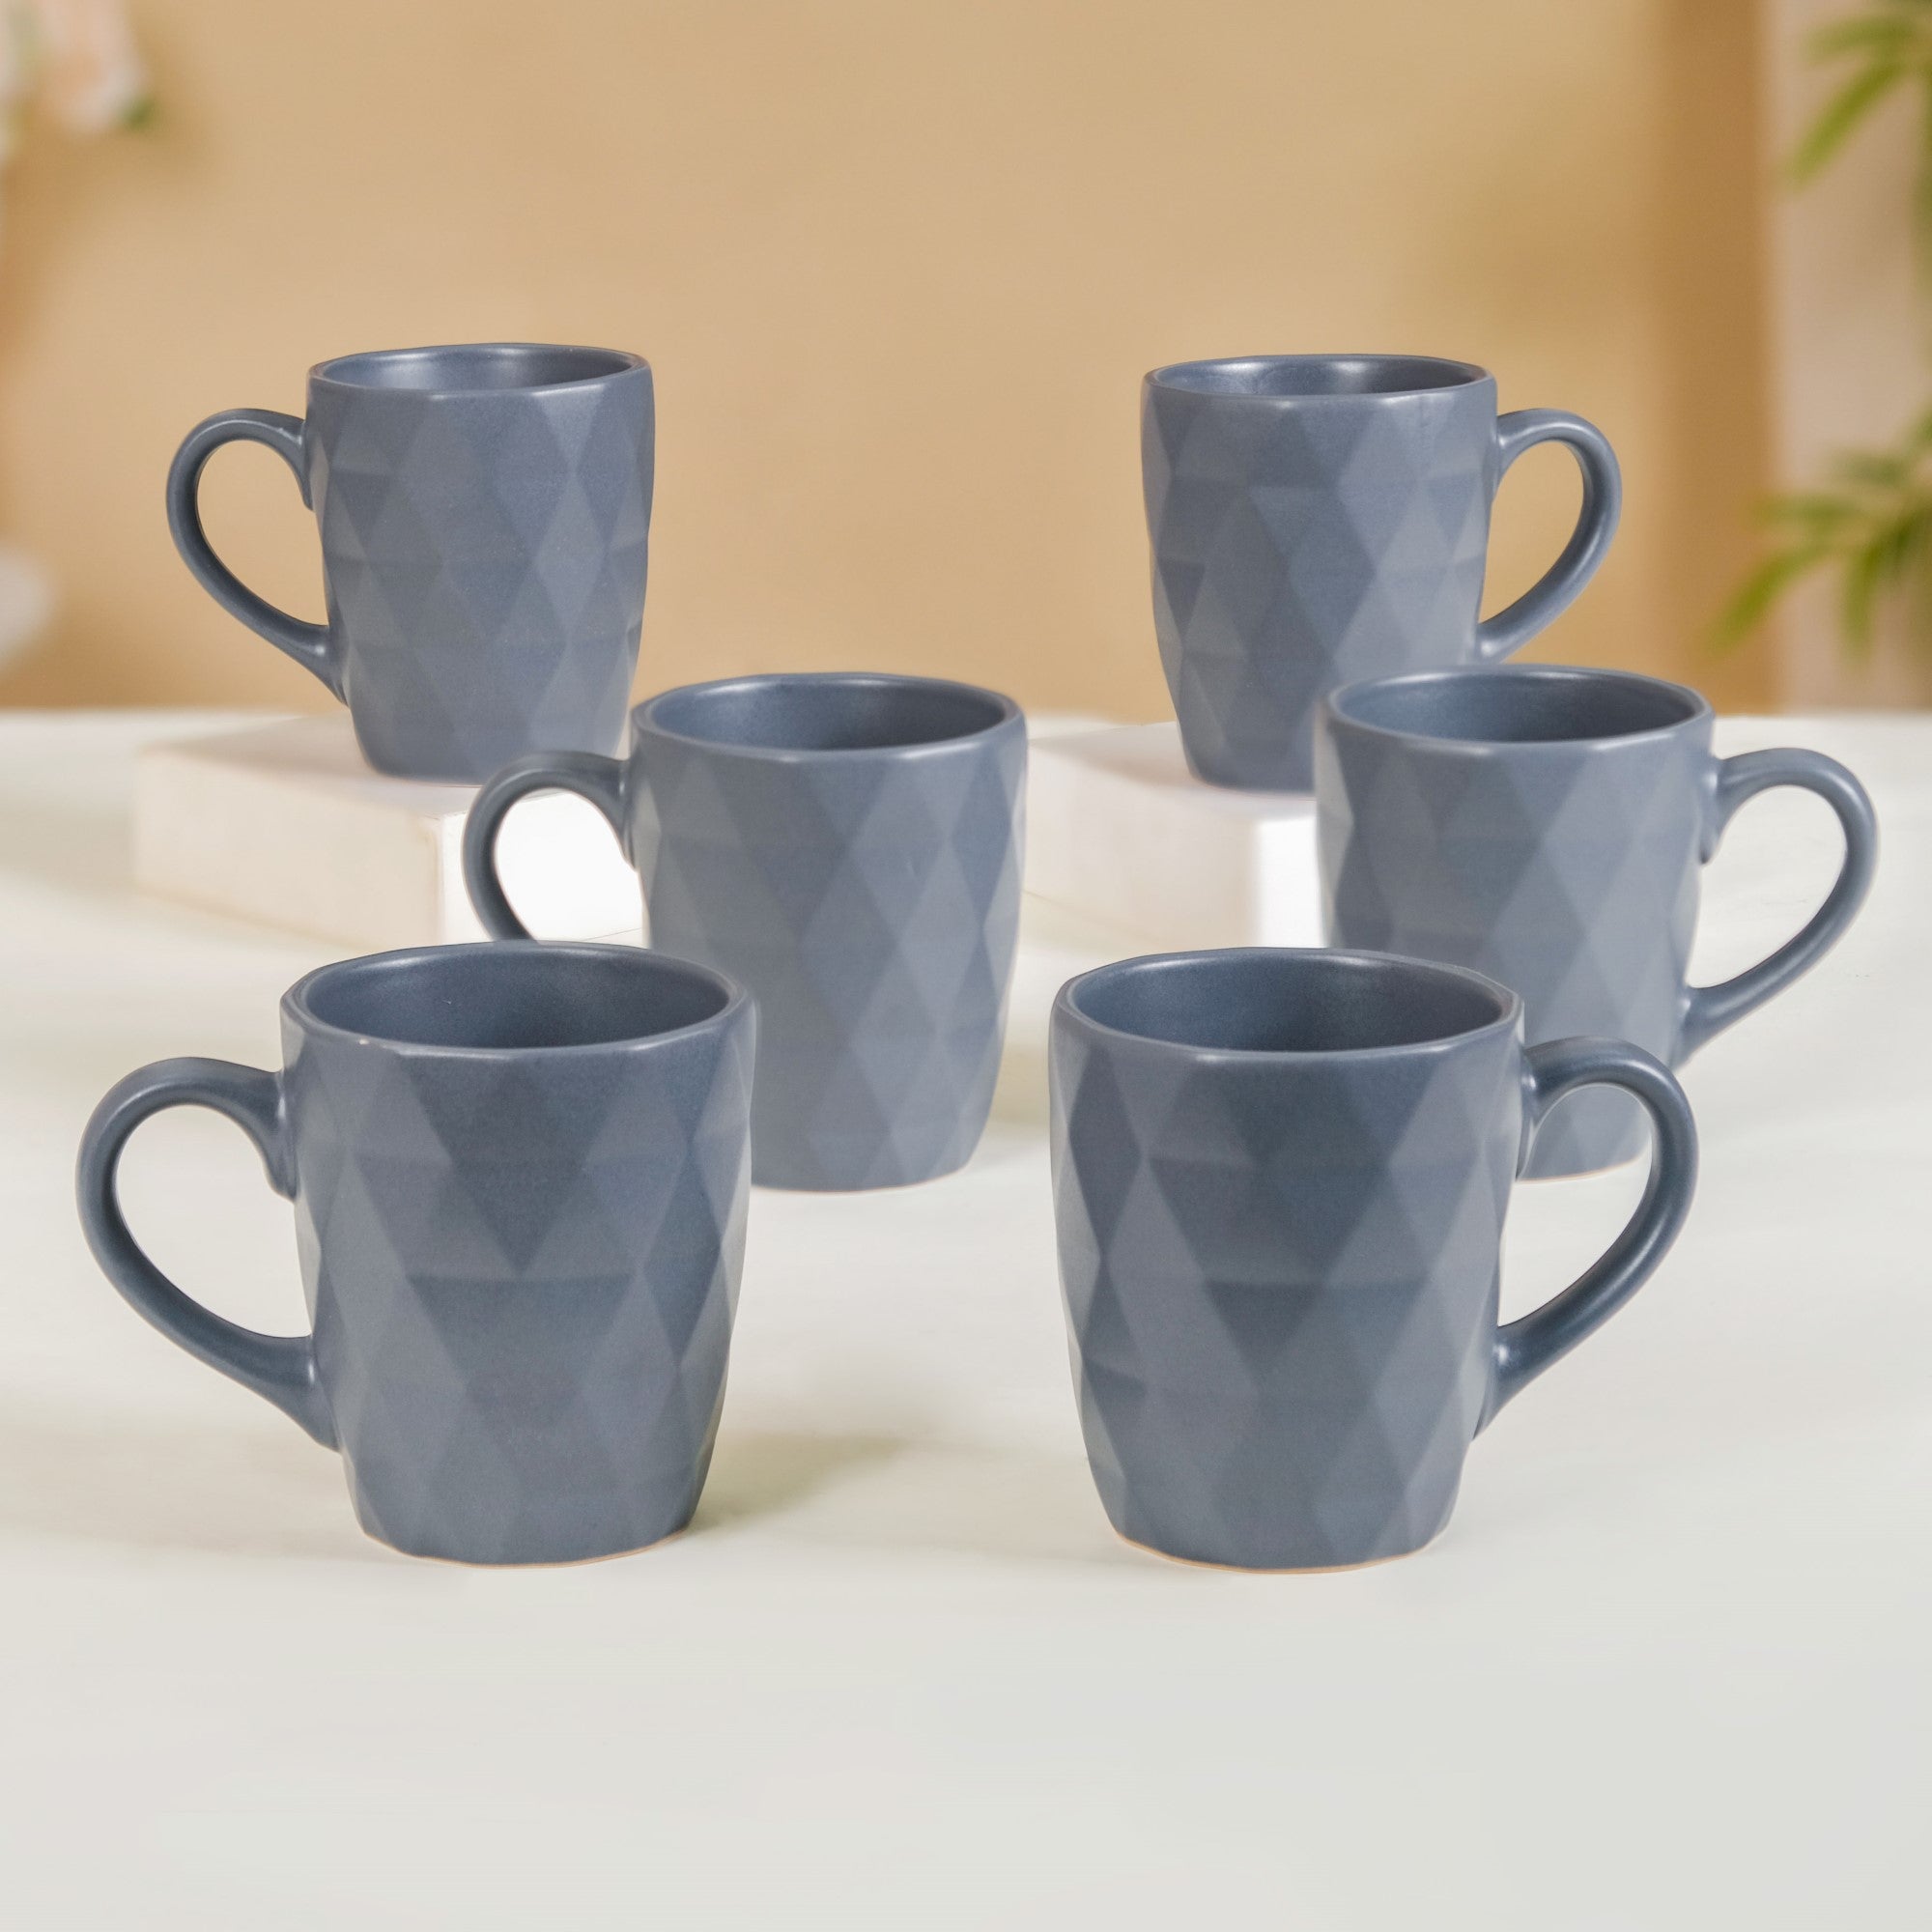 Set Of 6 Floral Patterned Coffee Mug Grey 350ml